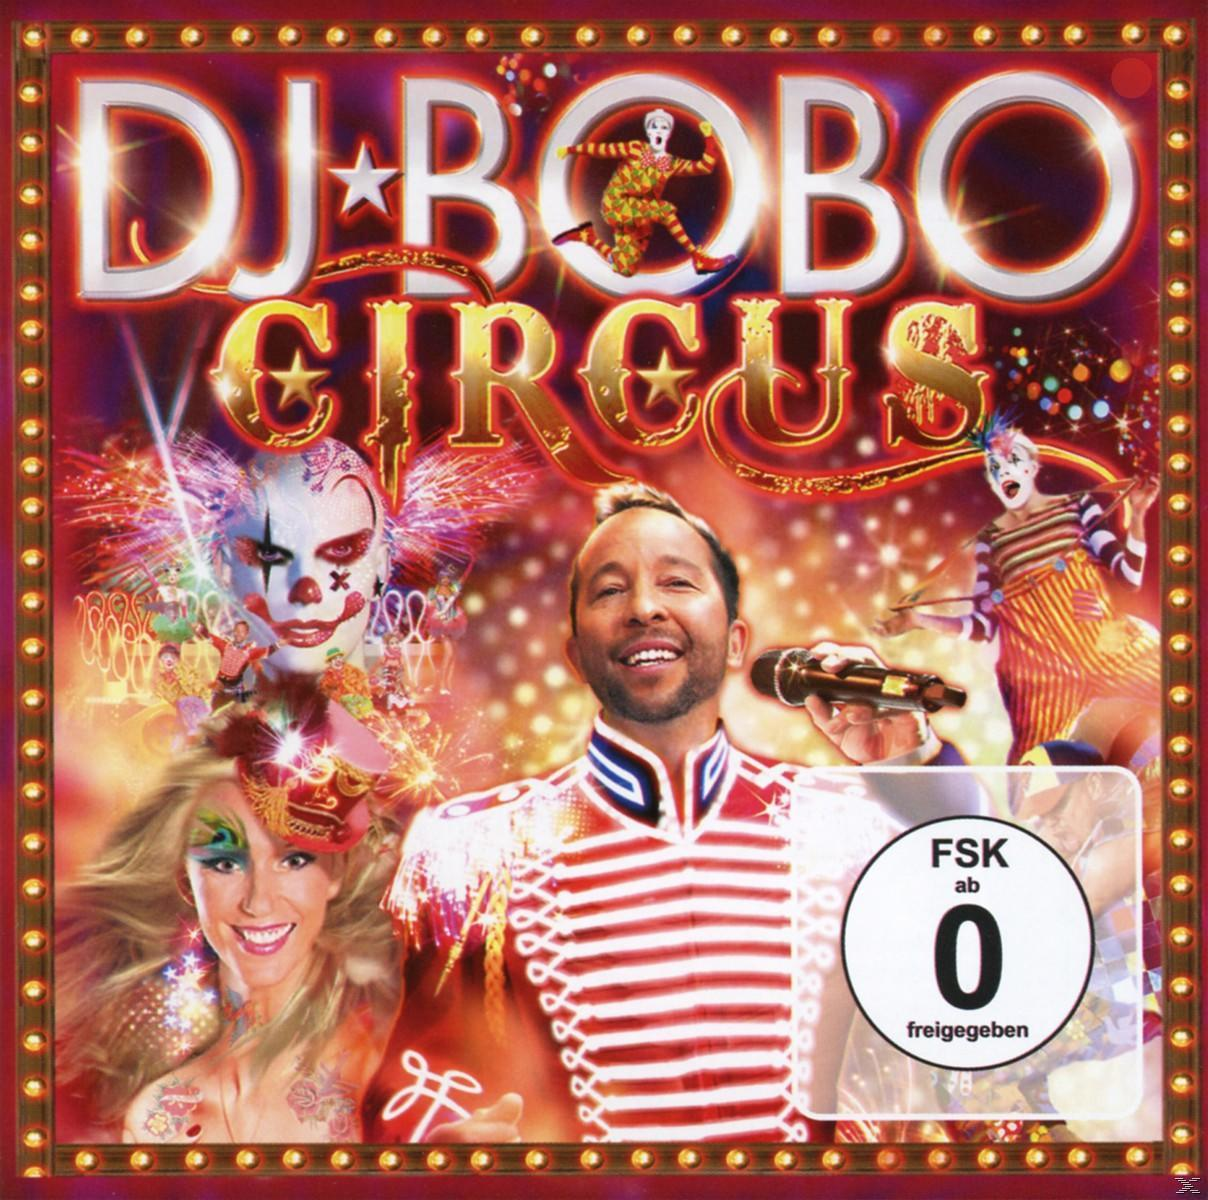 DJ Bobo - Circus - Video) + DVD (CD